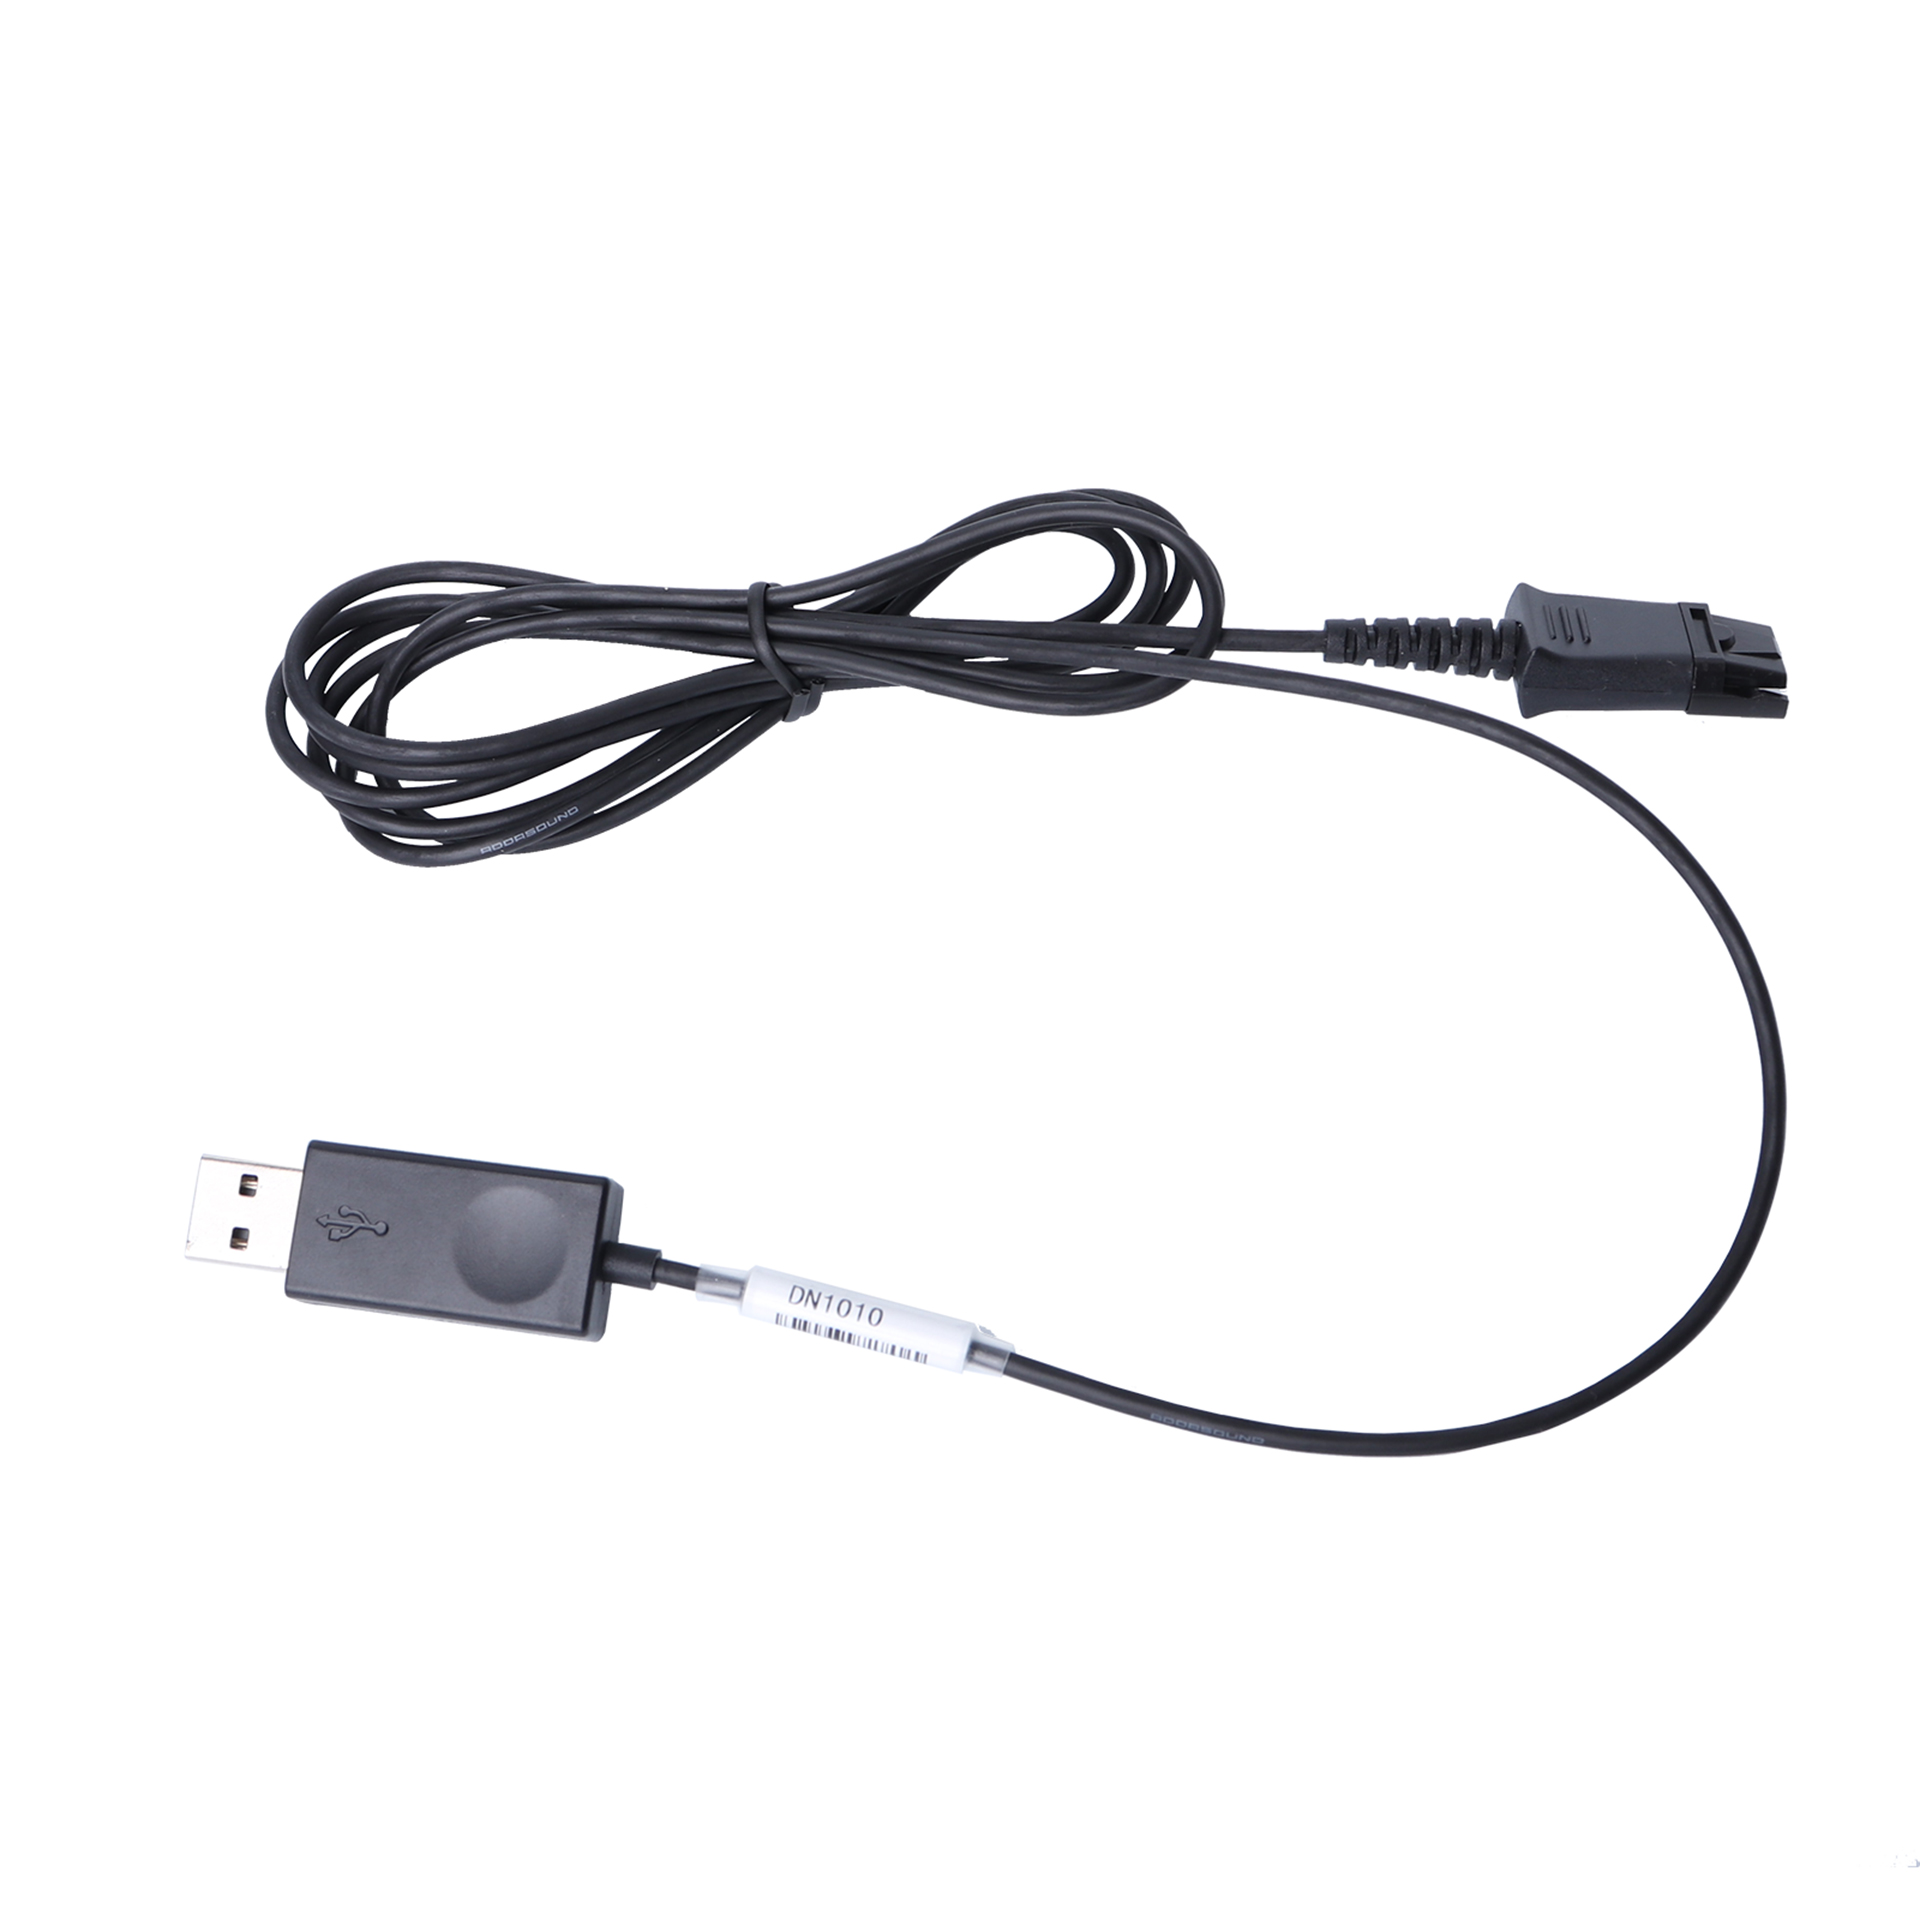 Addasound Anschlusskabel DN1010, PLX-QD zu USB-A